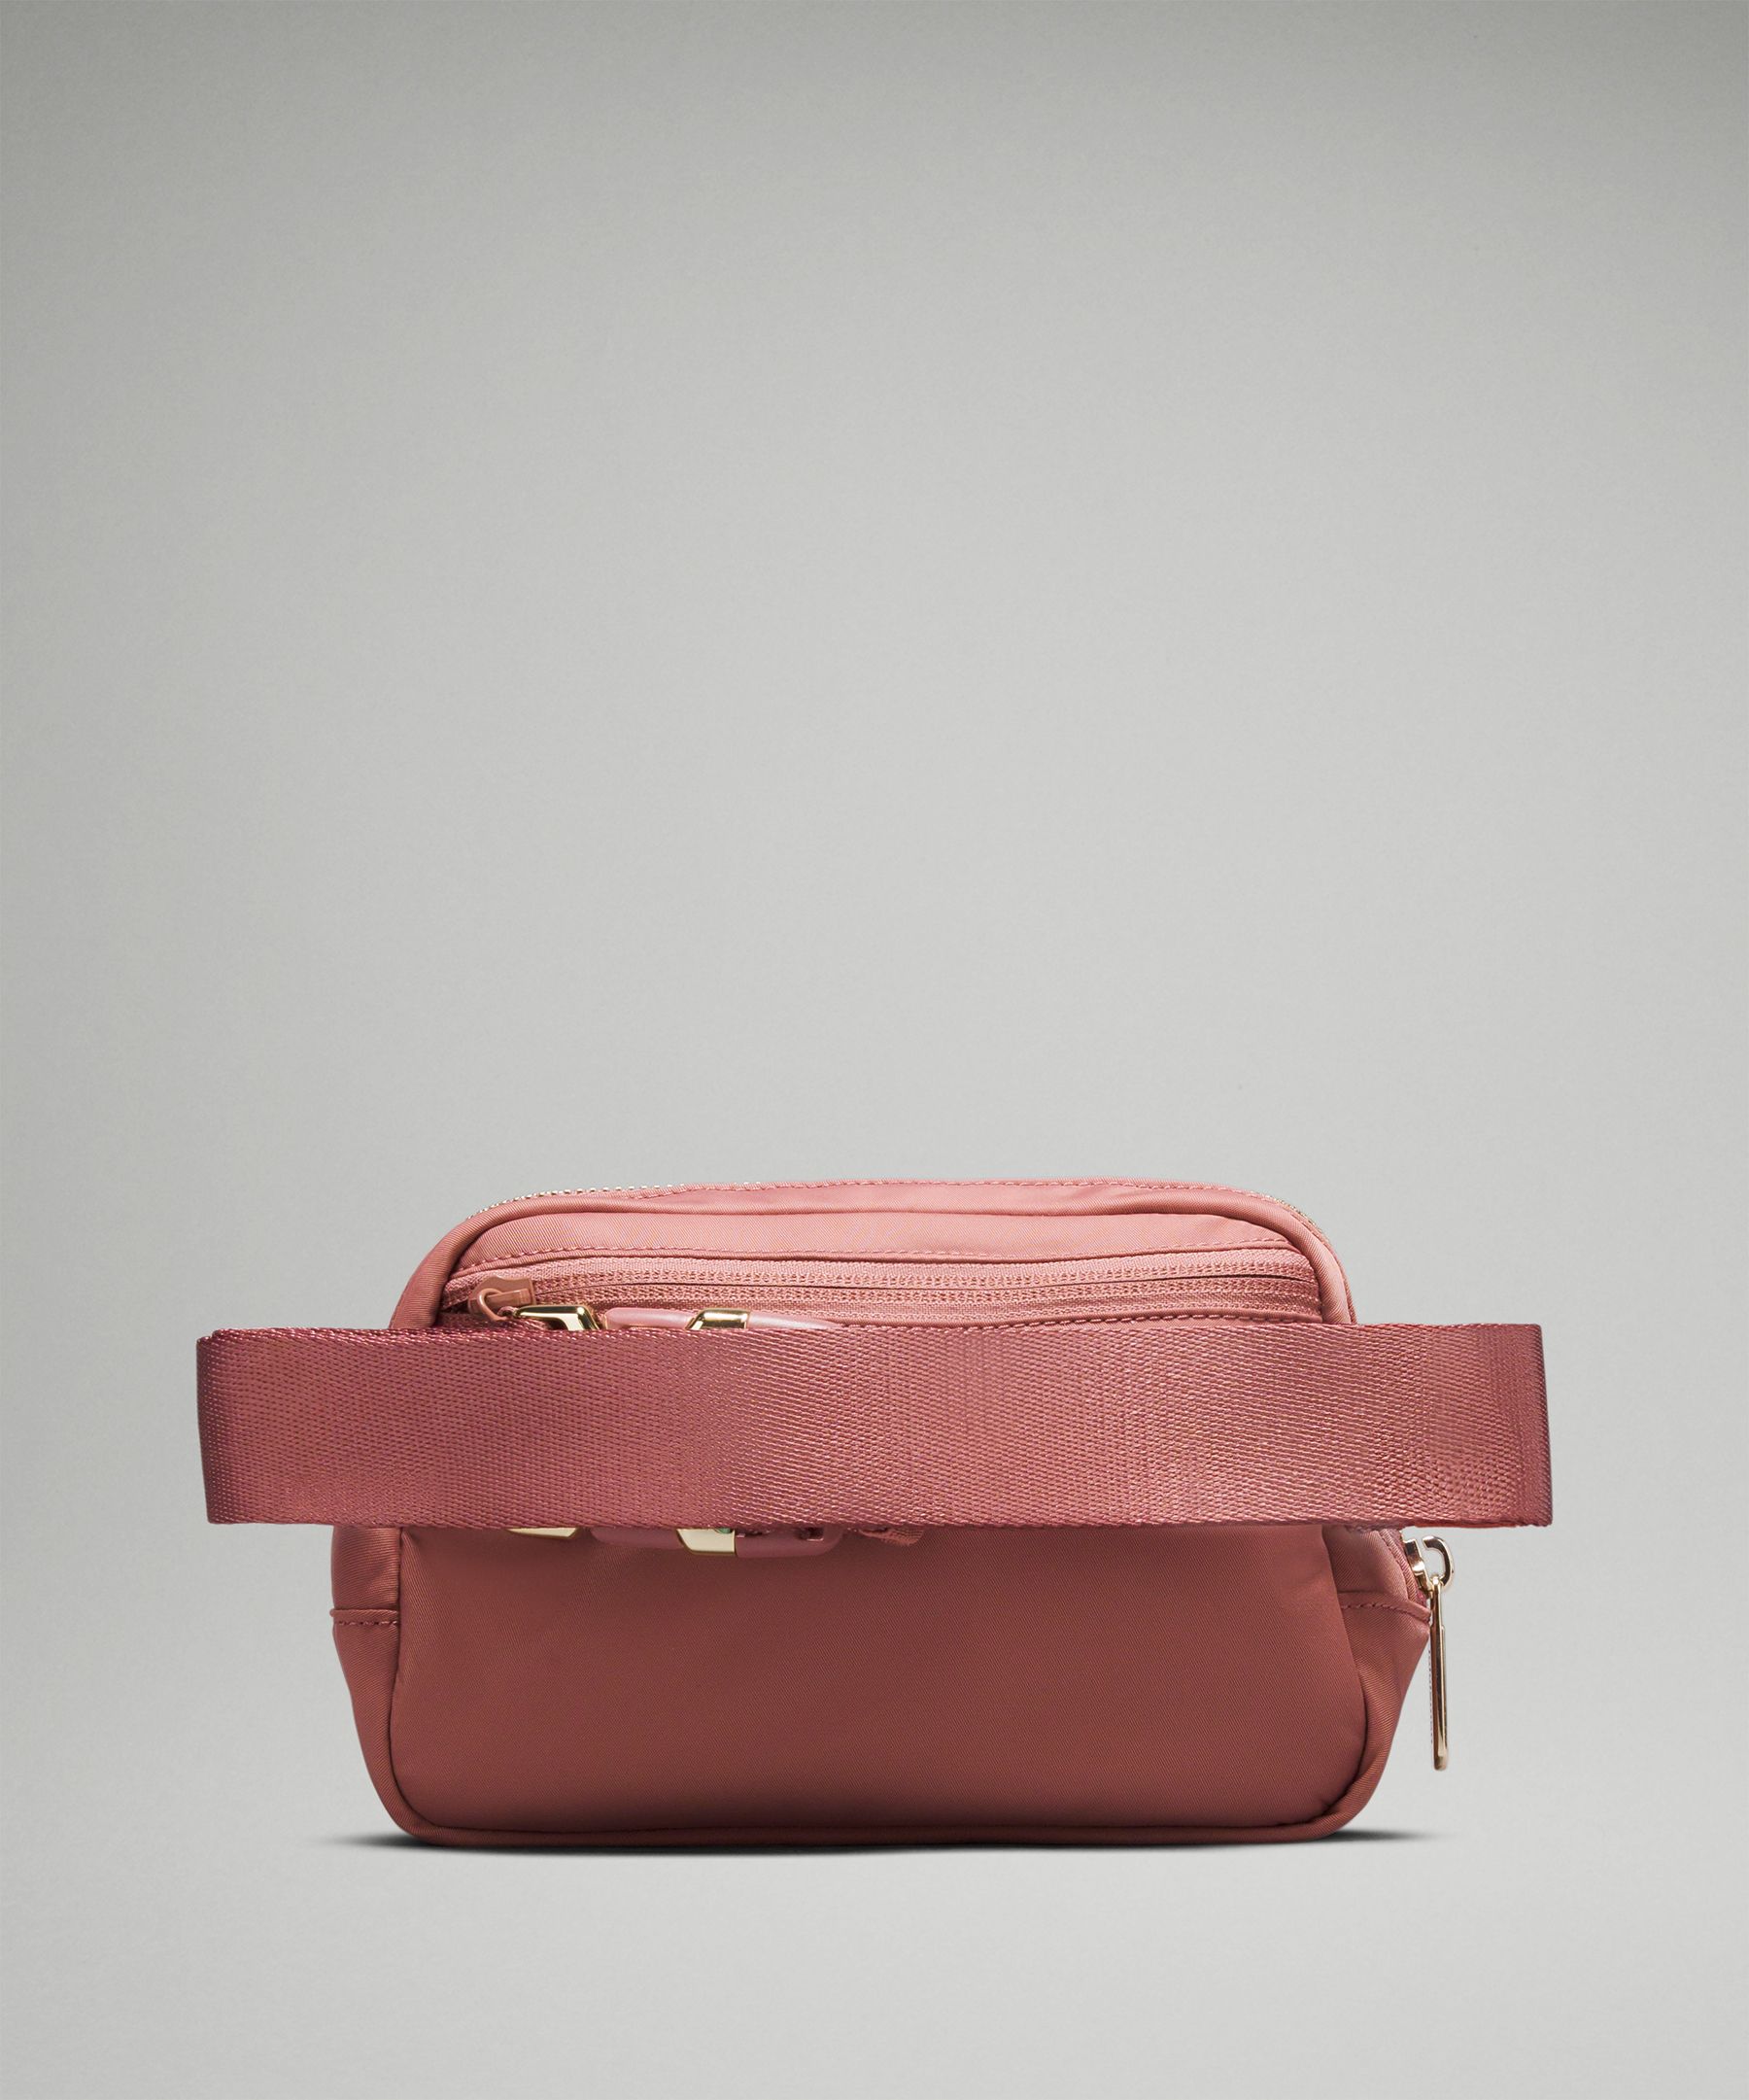 Lululemon Everywhere Belt Bag 1L (Deco Pink)